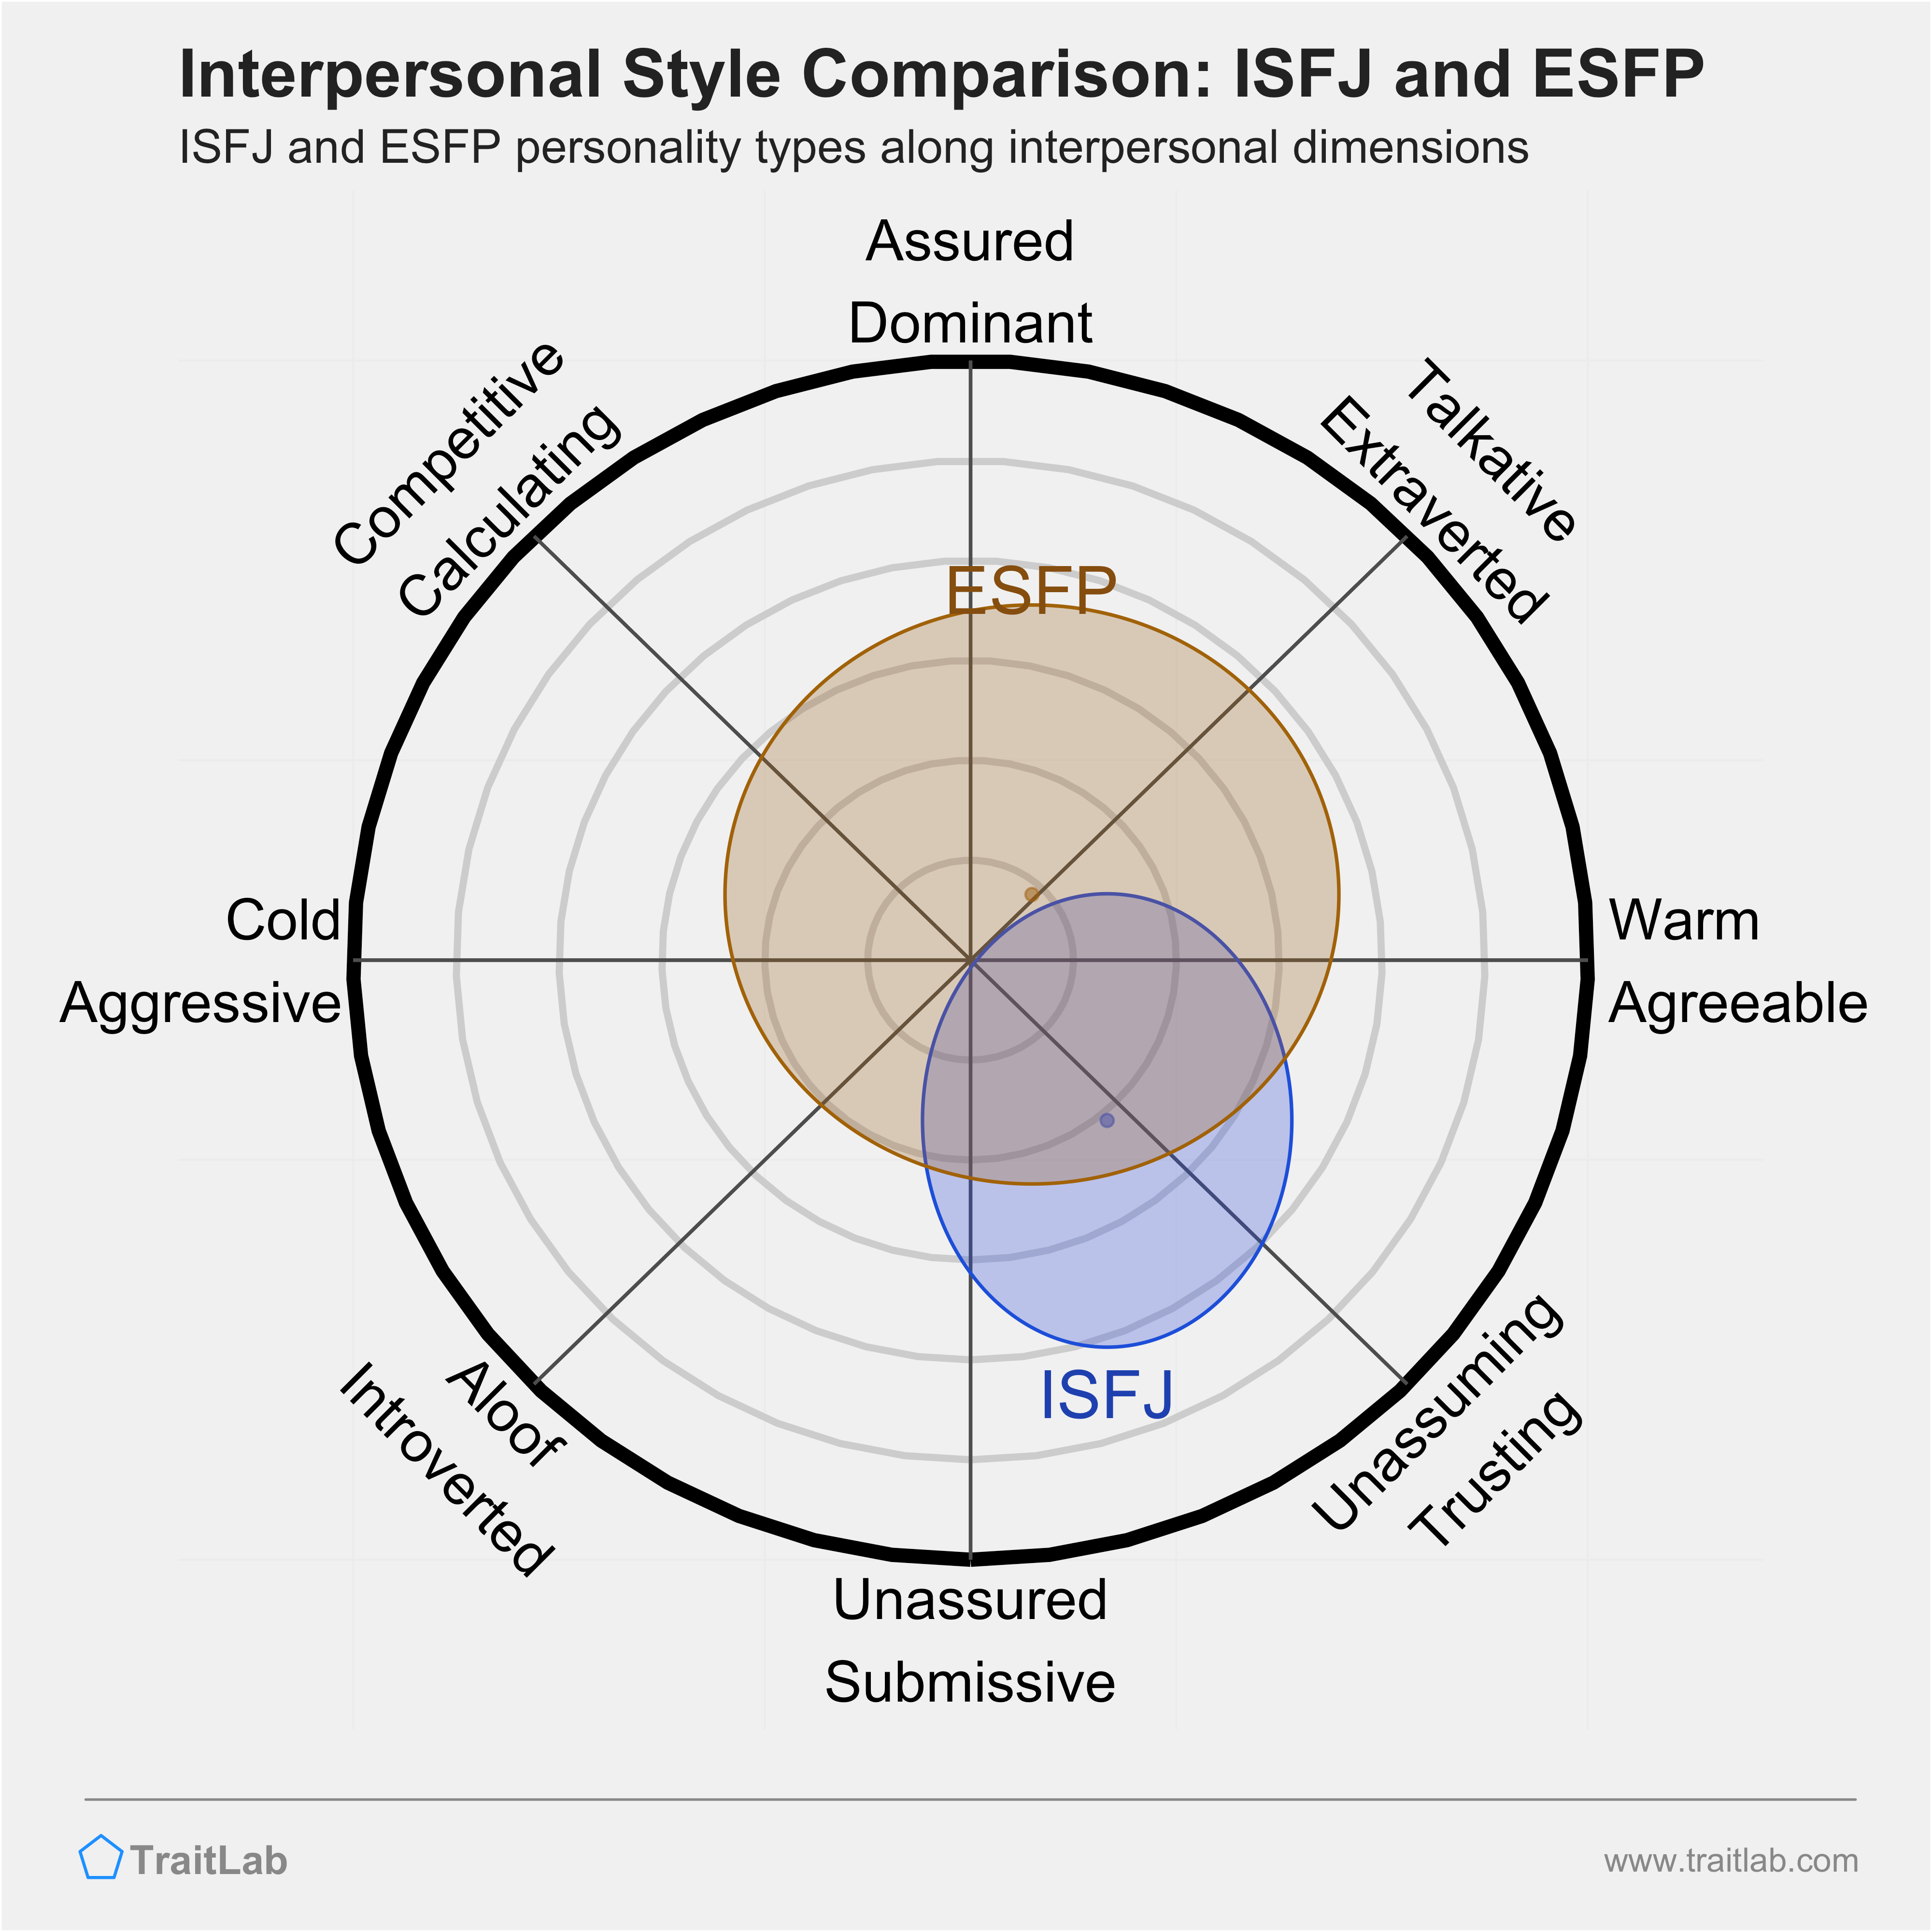 ISFJ and ESFP comparison across interpersonal dimensions